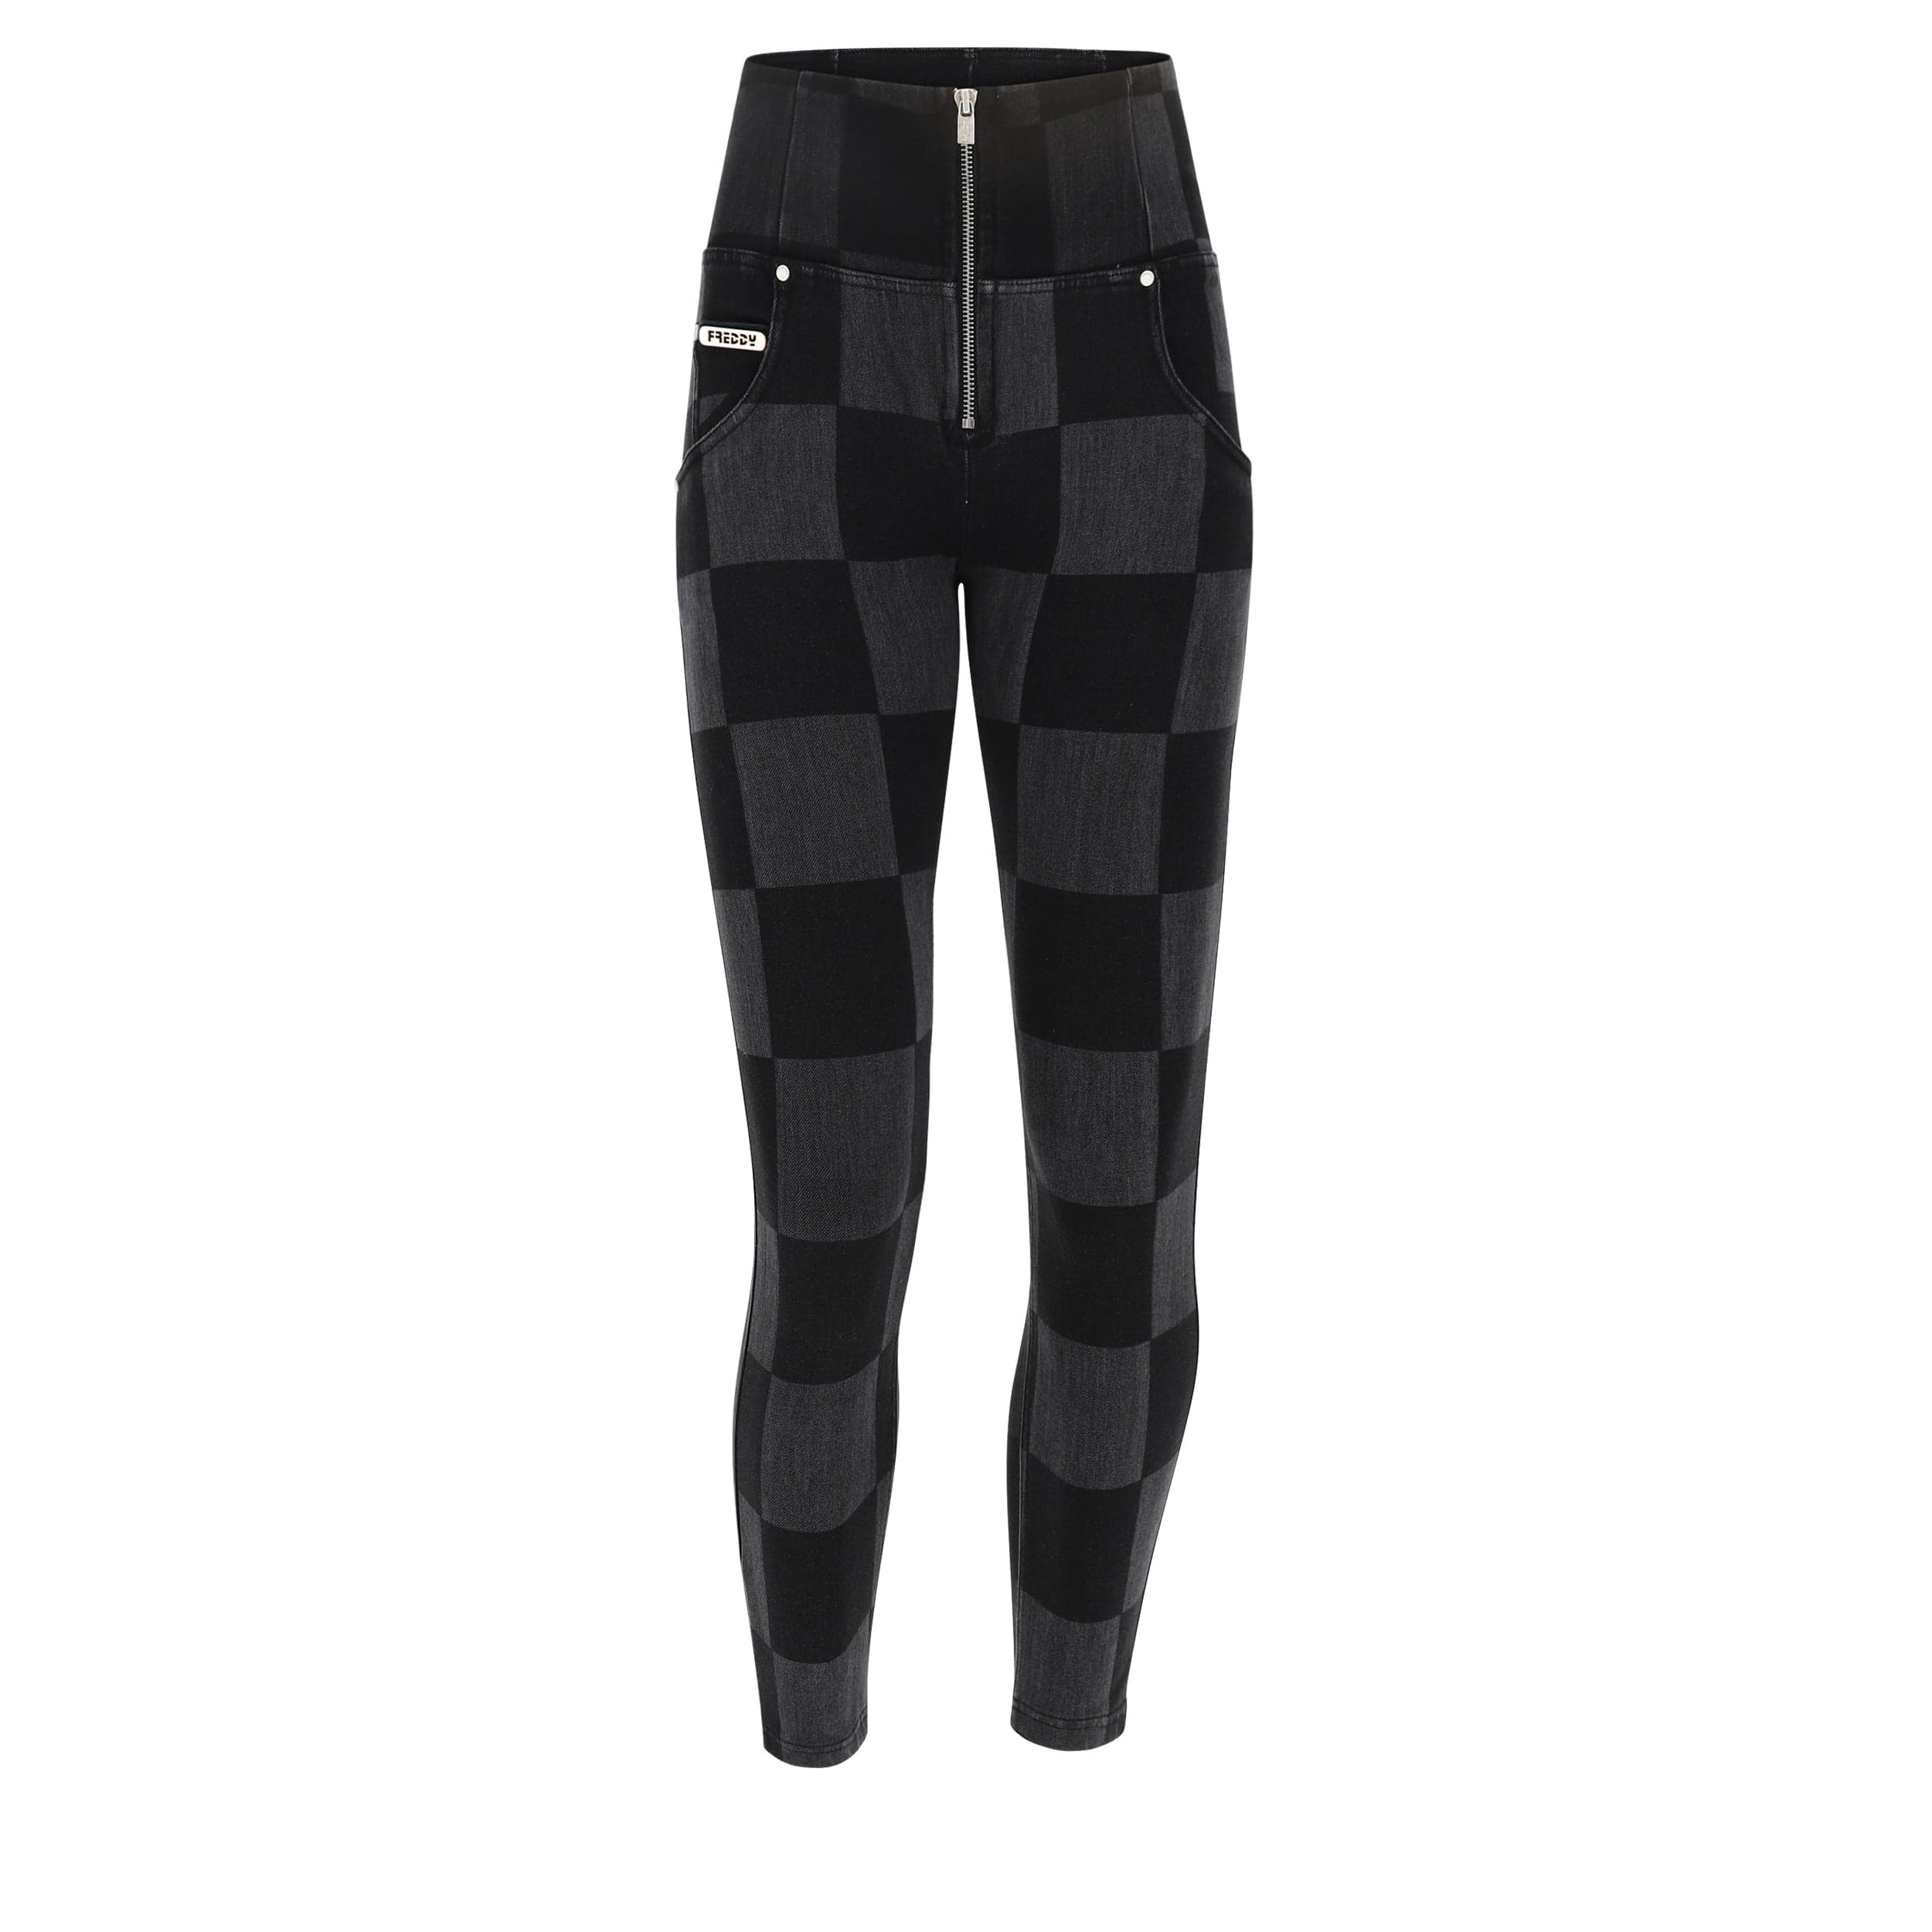 WR.UP® Snug Checkered Jeans - High Waisted - 7/8 Length - Black & Grey 2